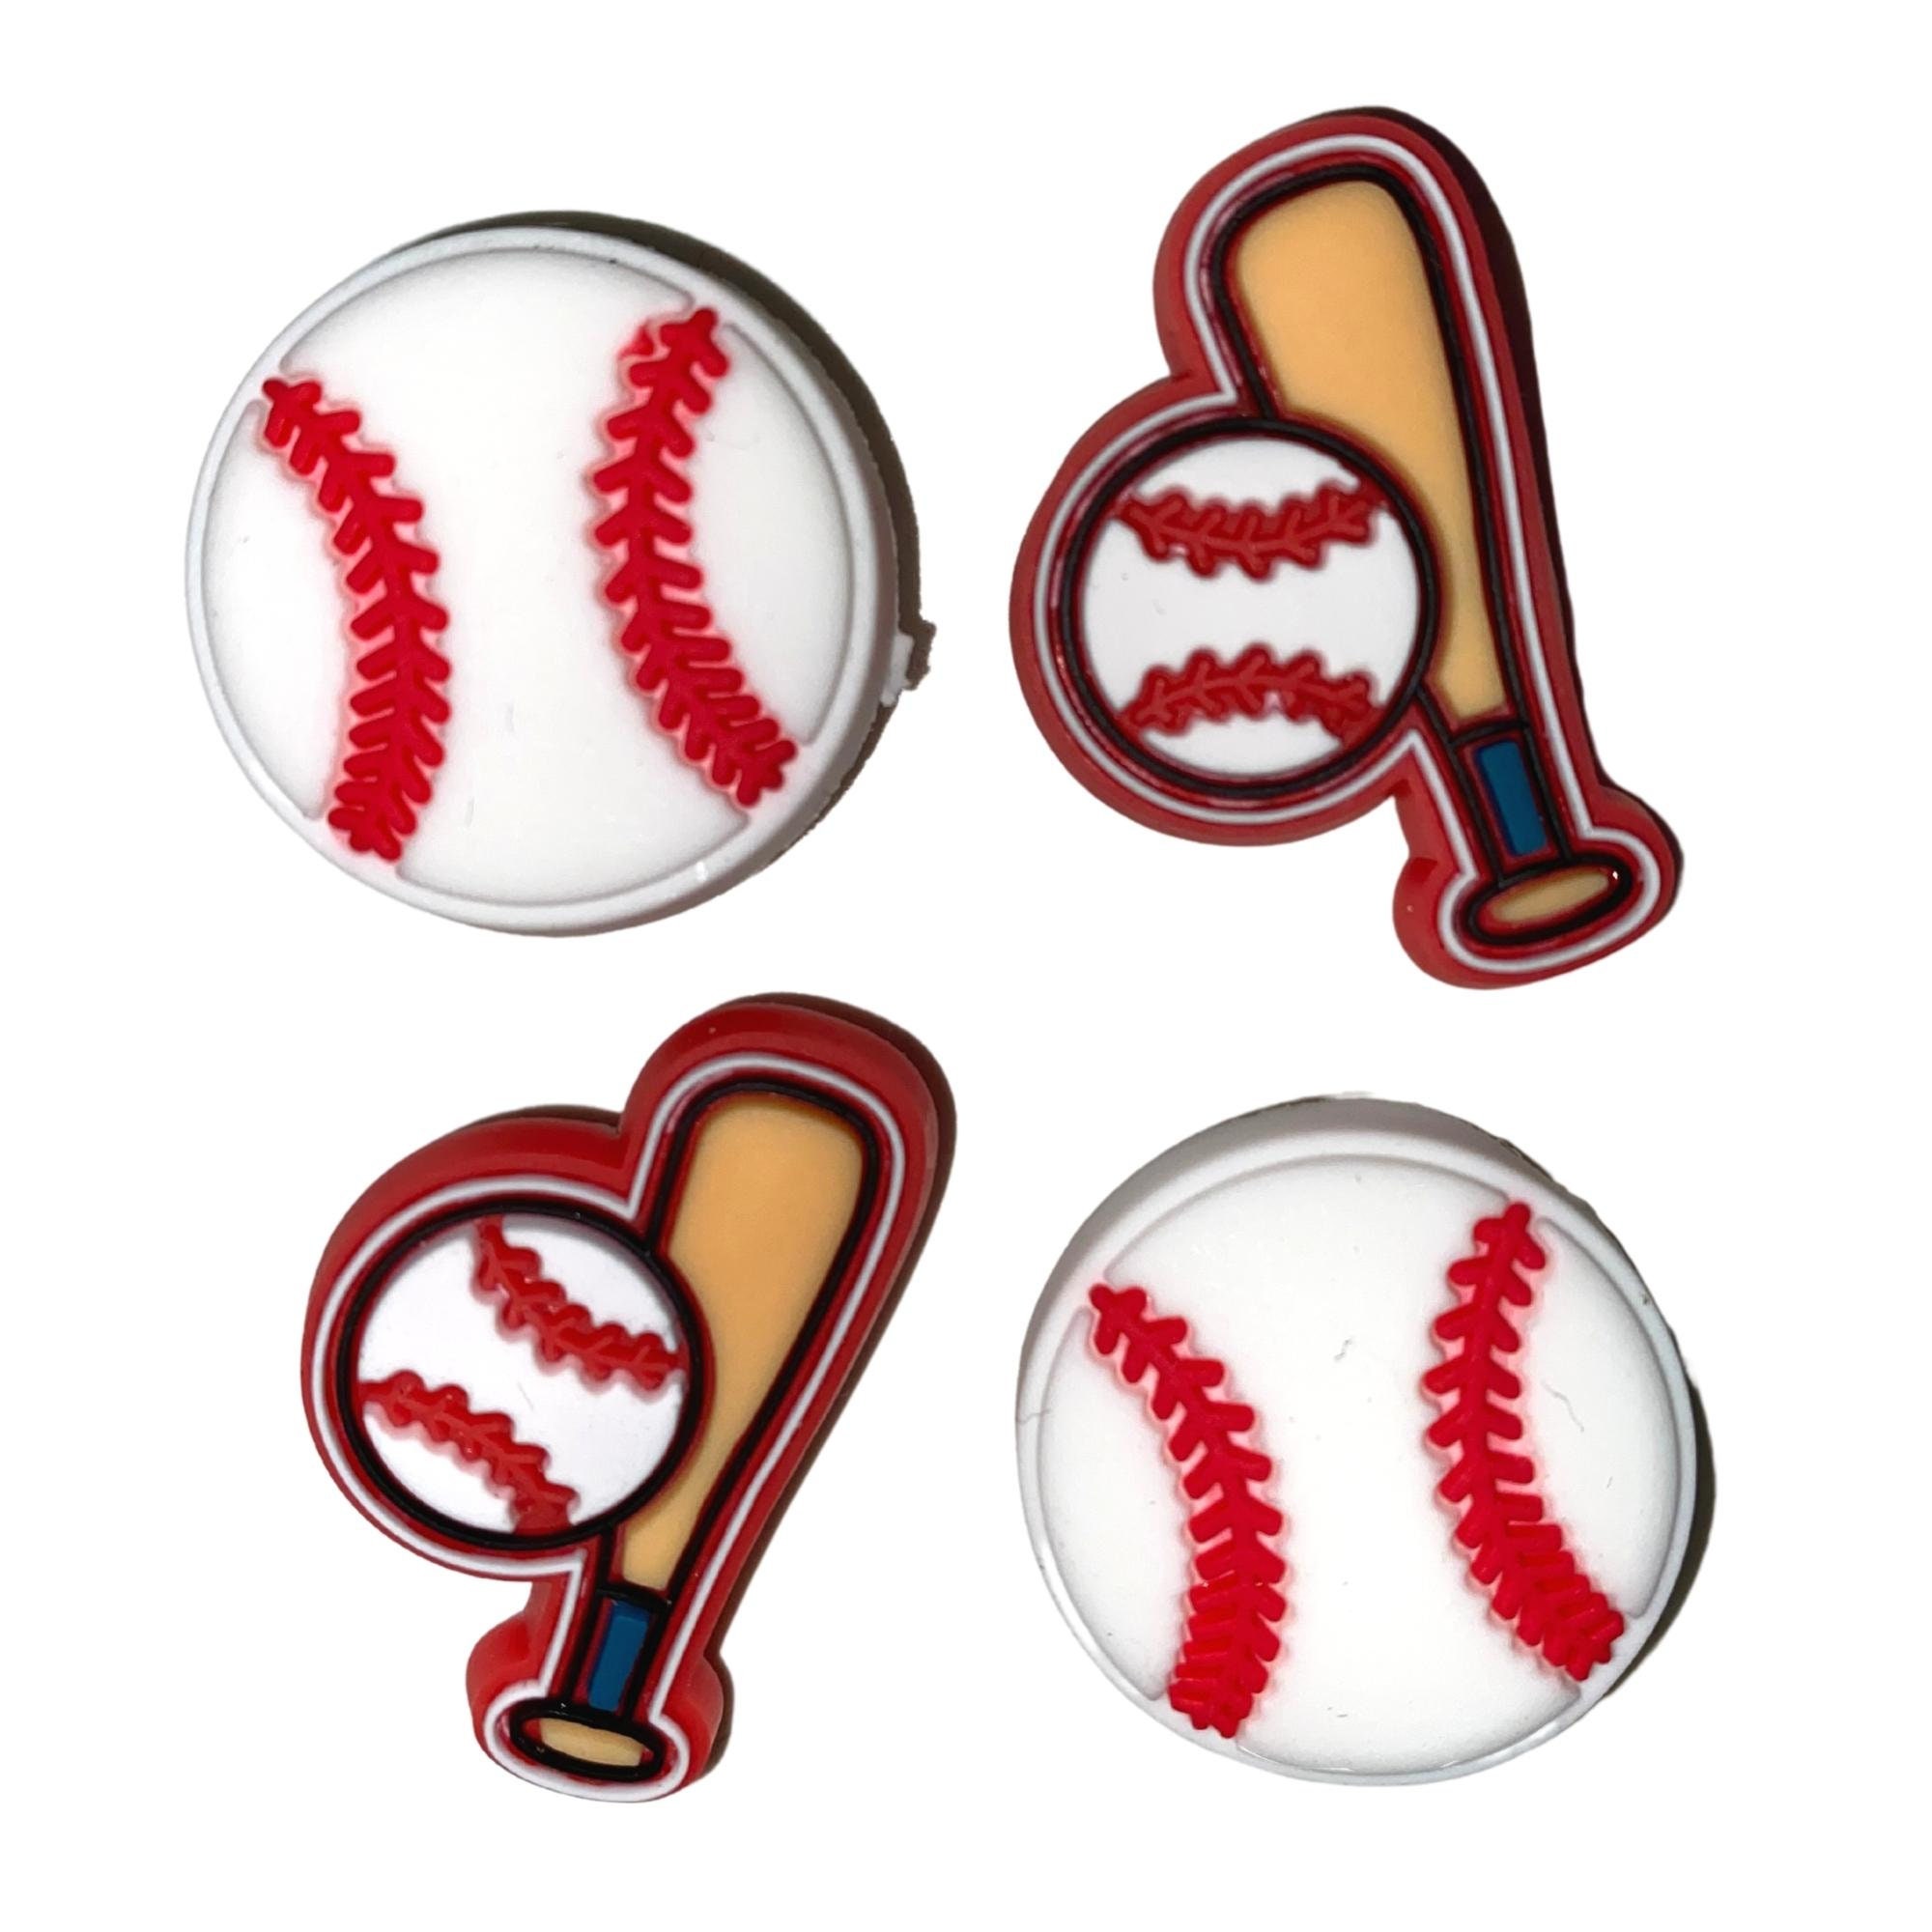 25 50PCS Baseball Shoe Charms for Croc Bubble Slides Clogs Sandals, Sports  Balls Shoe Accessories Decorations for Boys Men Teens Adults